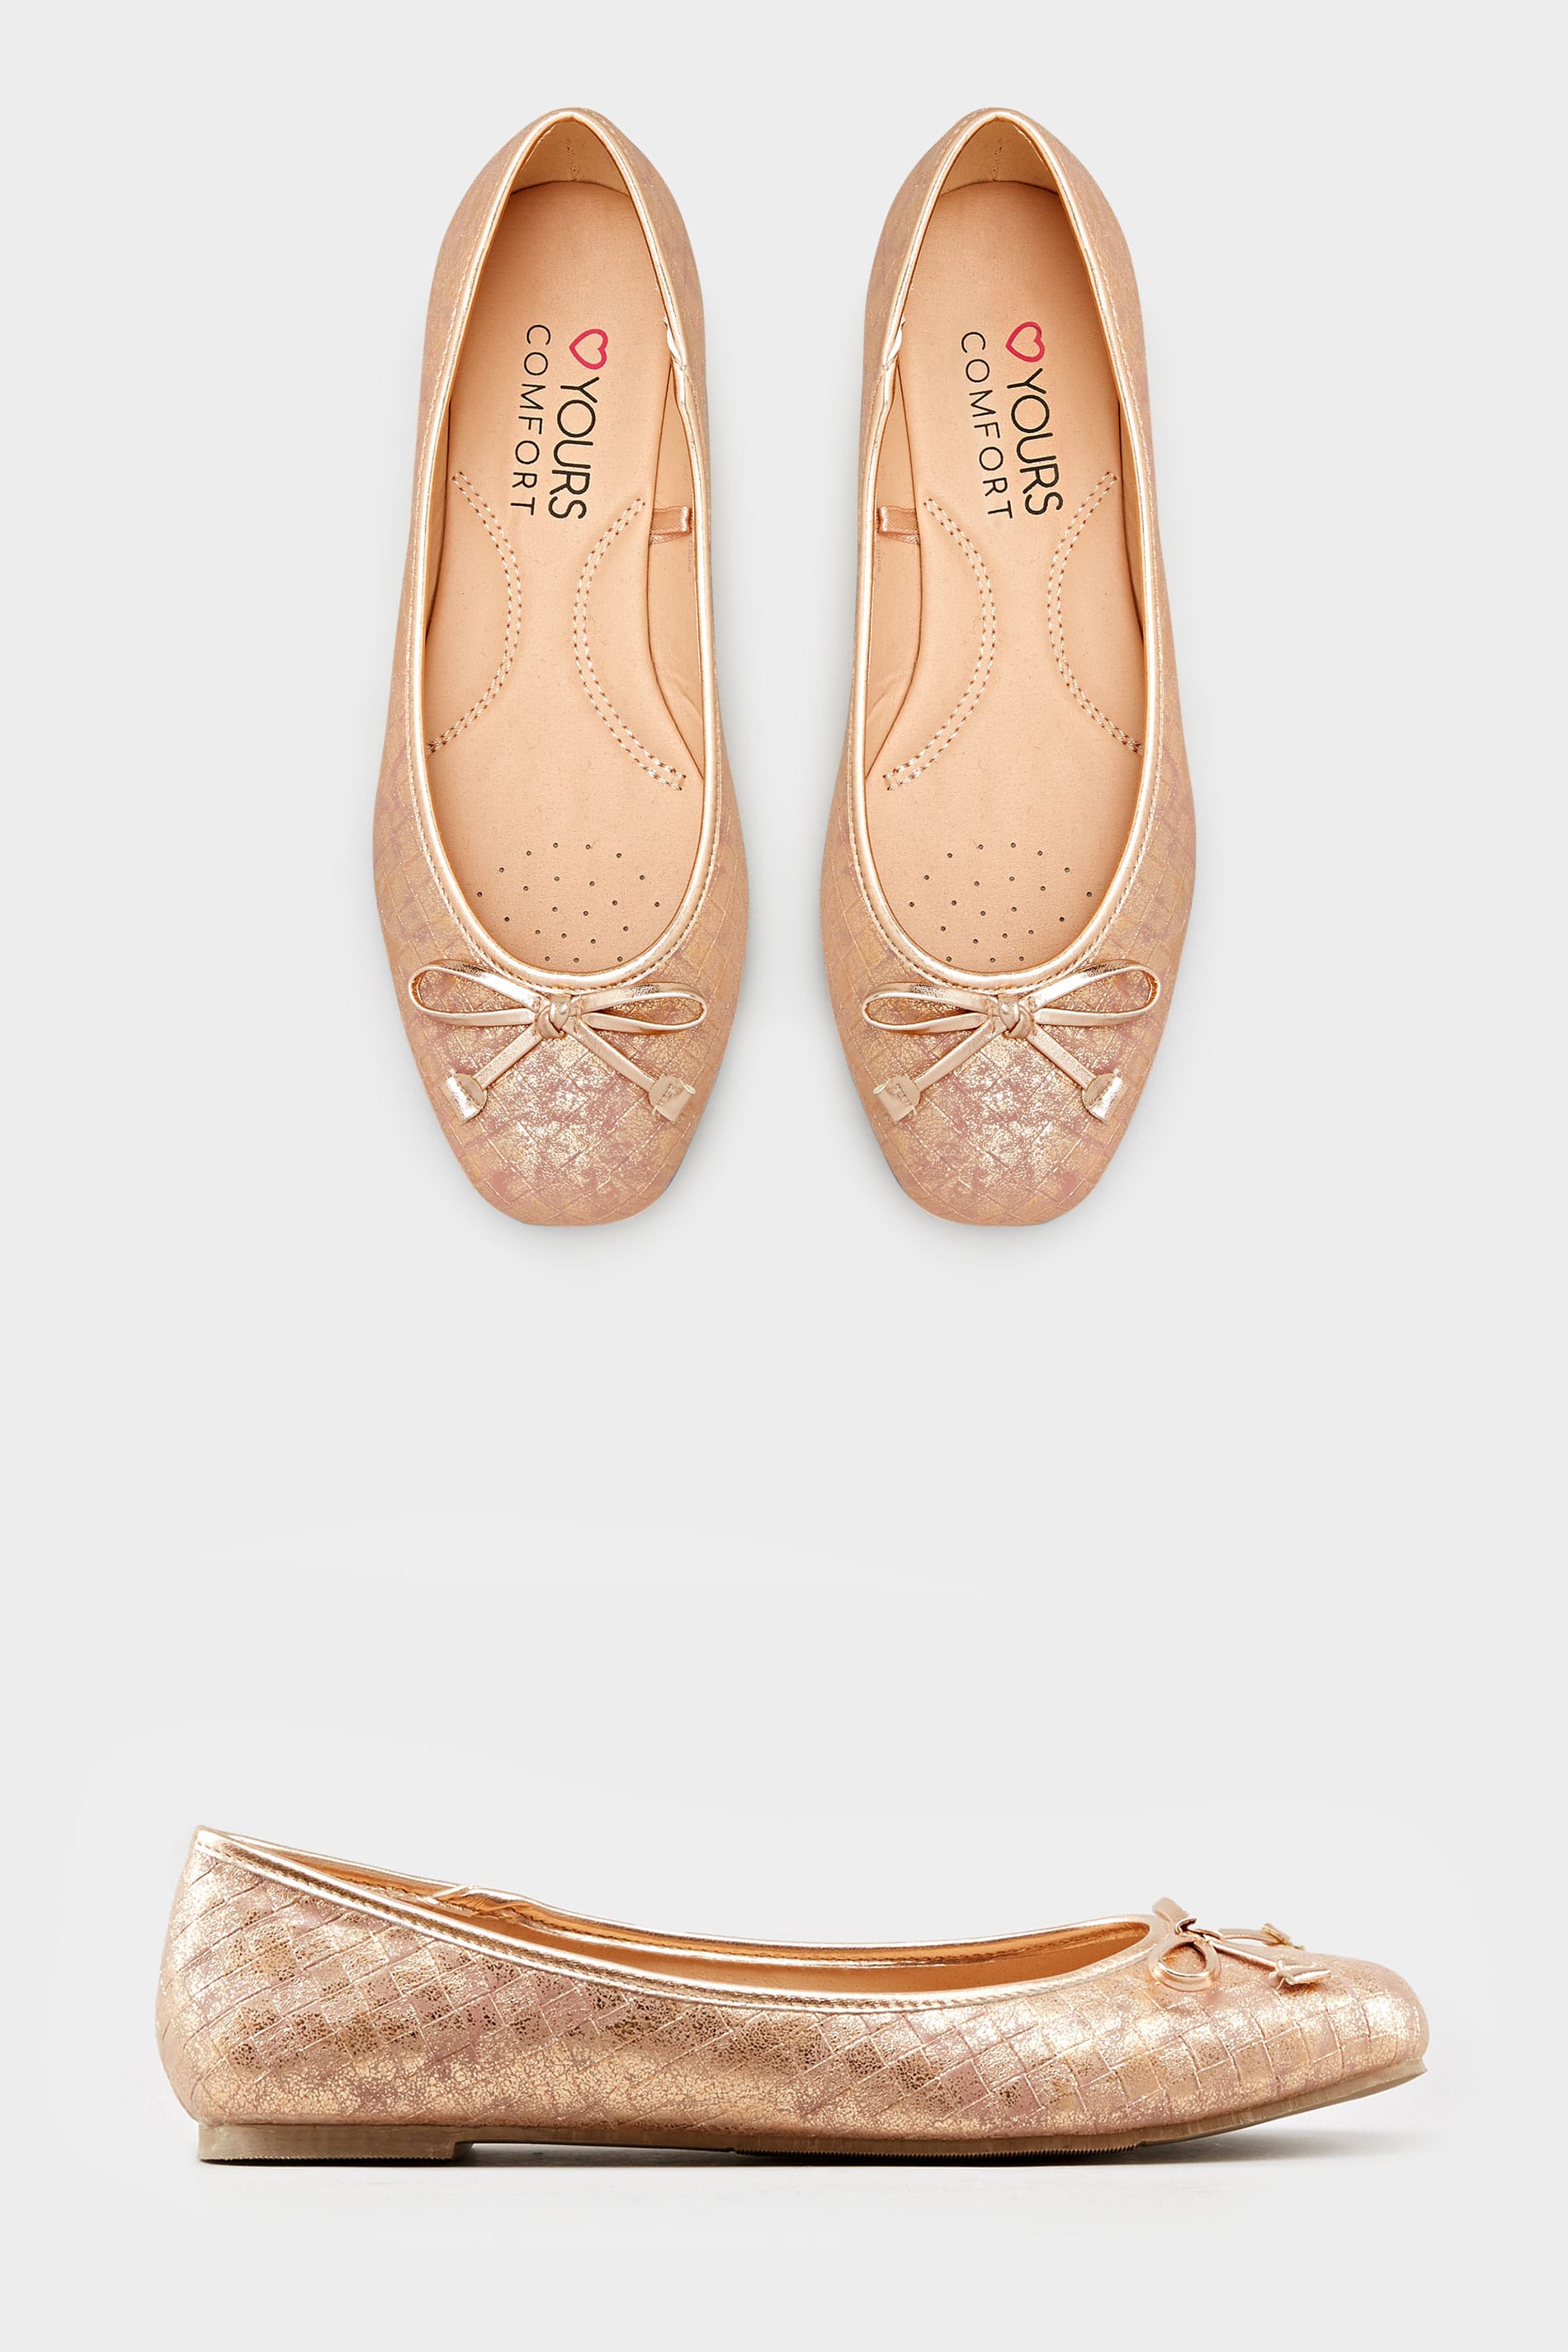 rose gold ballerina shoes